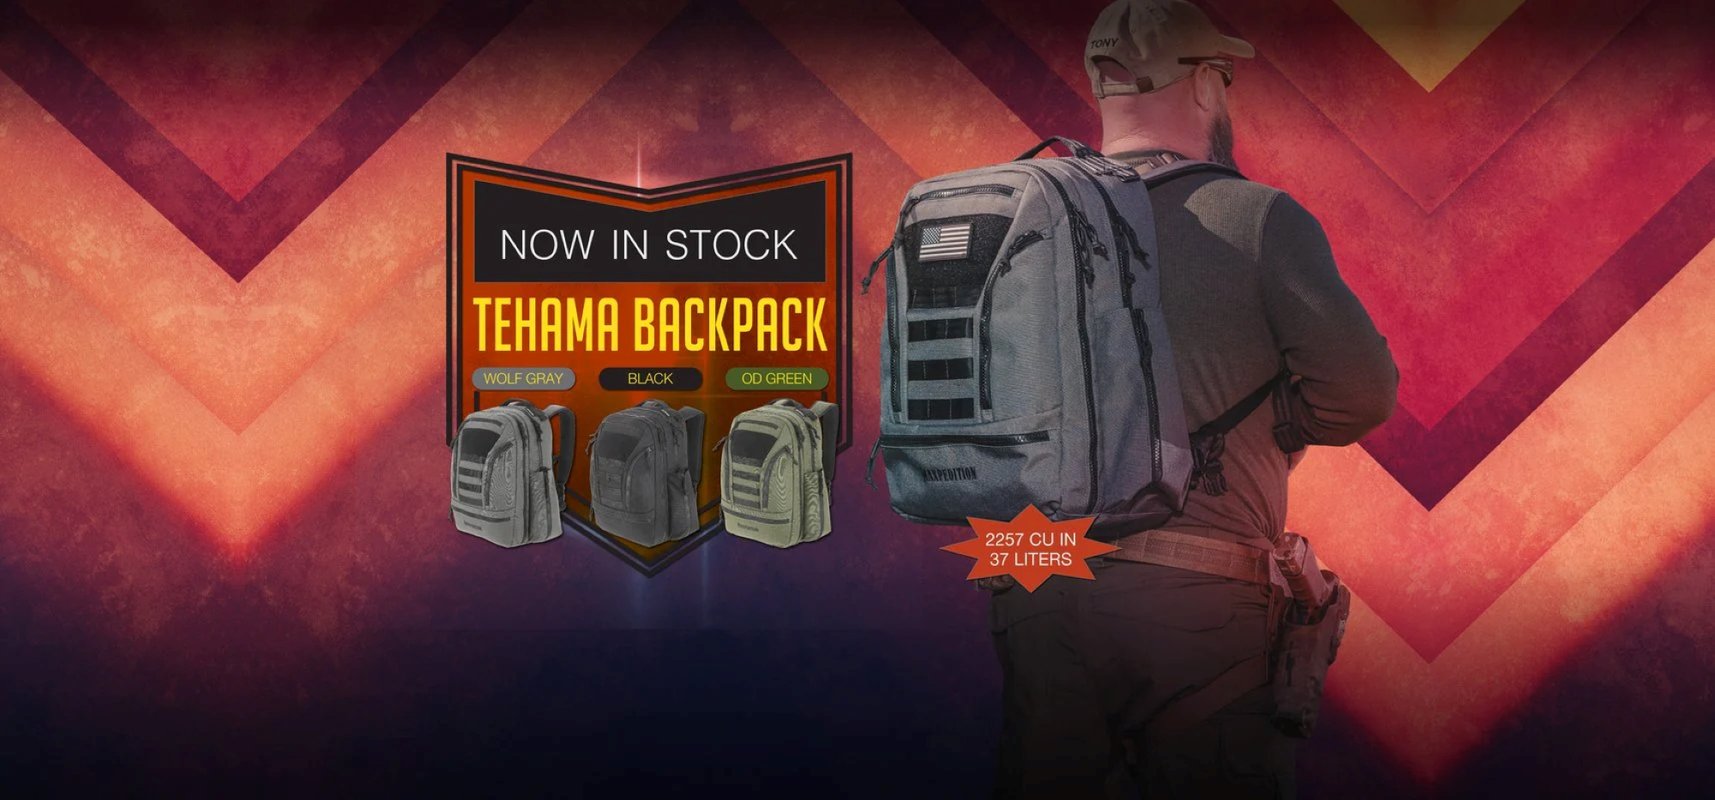 Tehama Backpacks